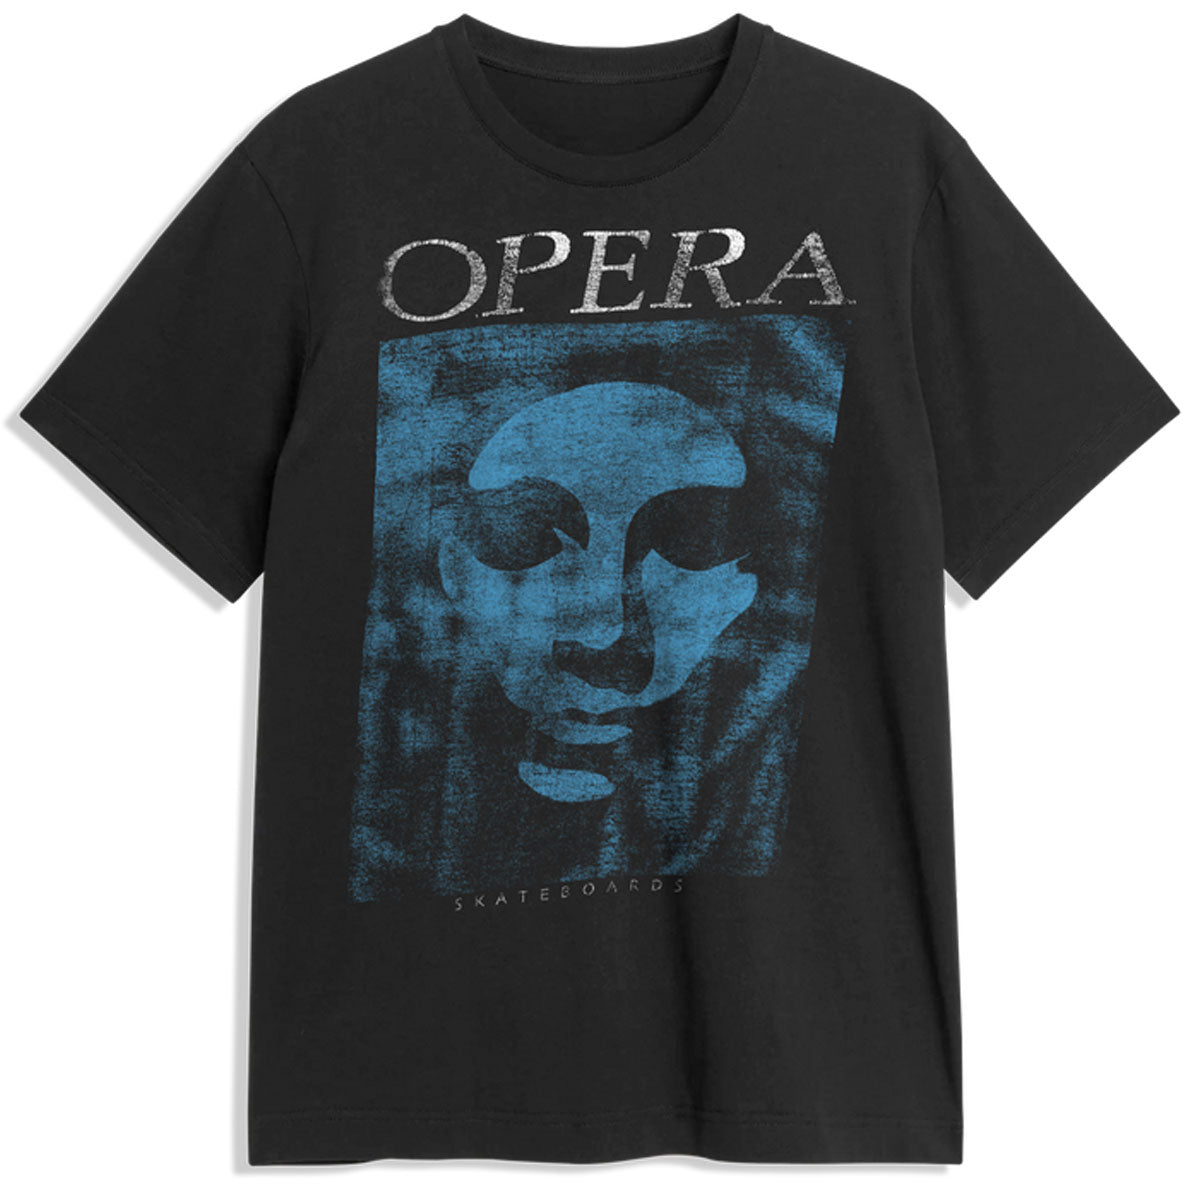 Opera Mask Vintage T-Shirt - Black image 1